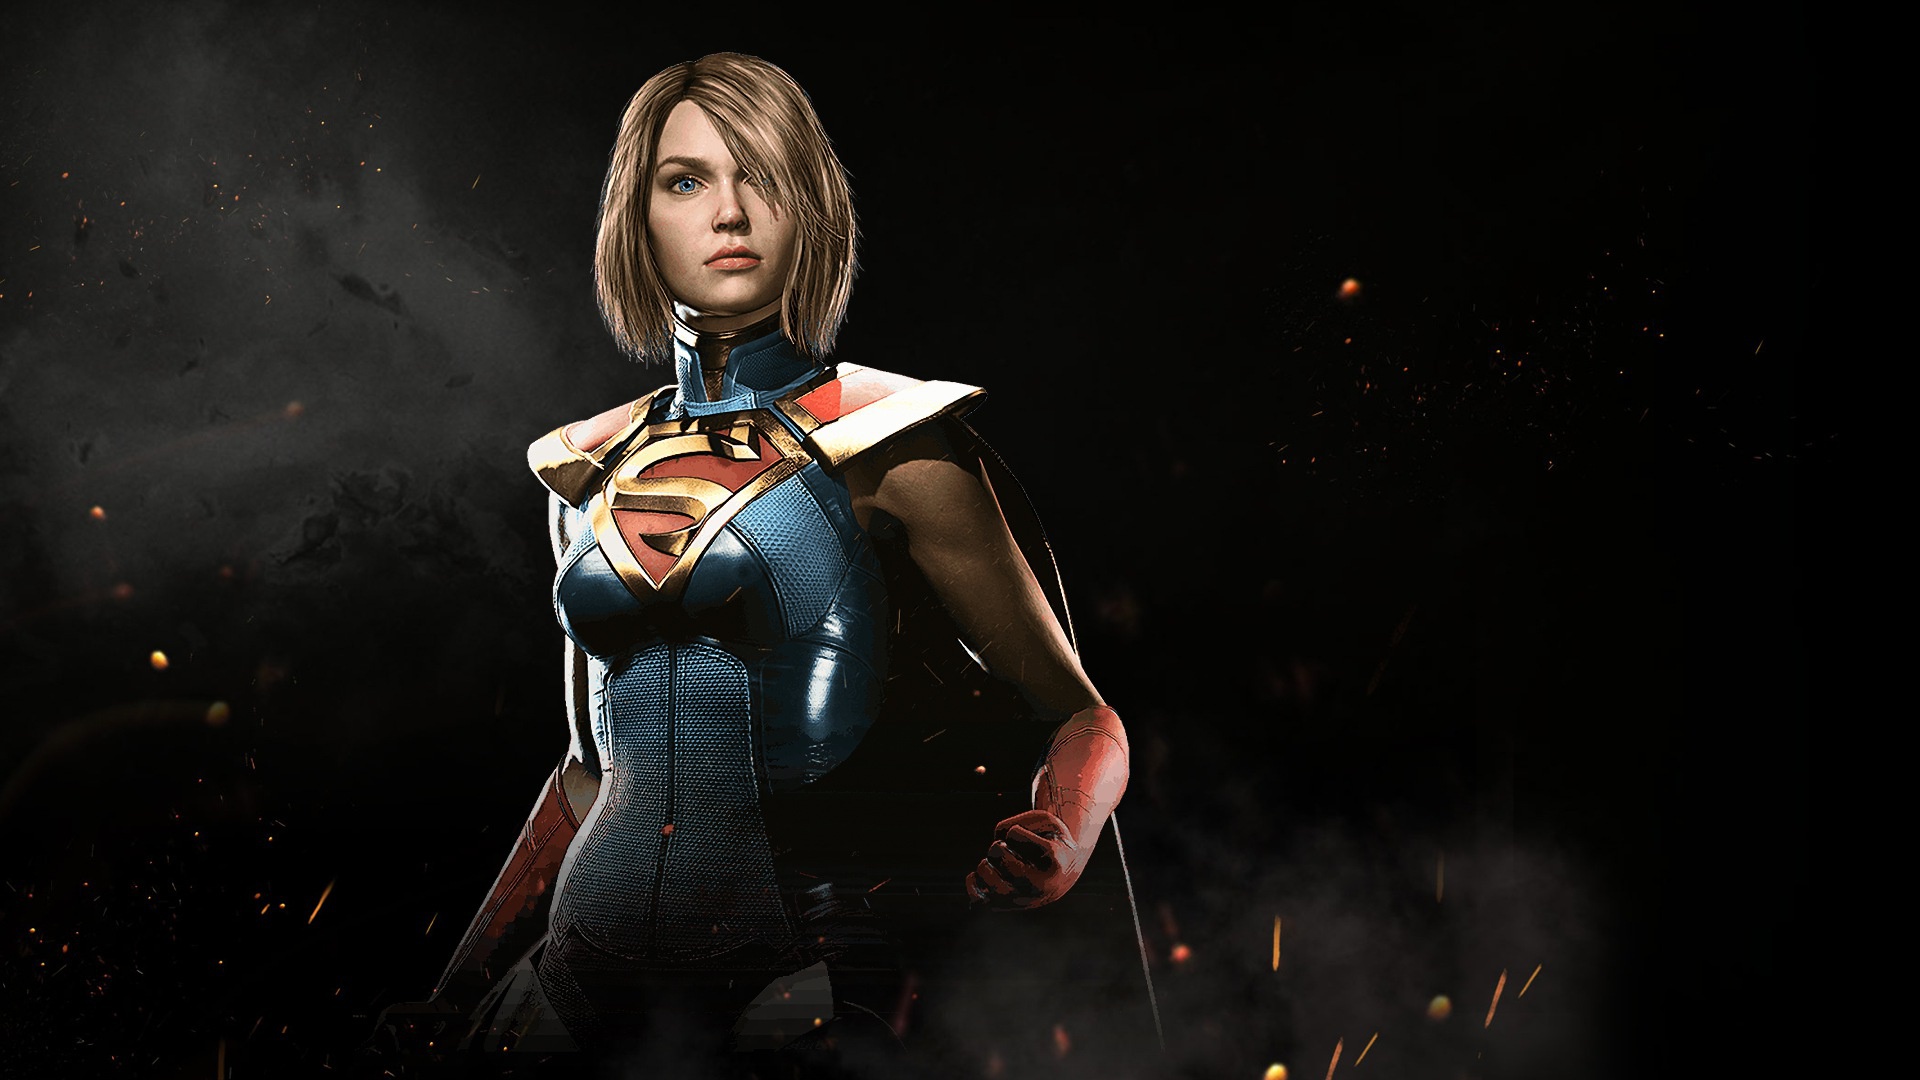 injustice, video game, injustice 2, supergirl